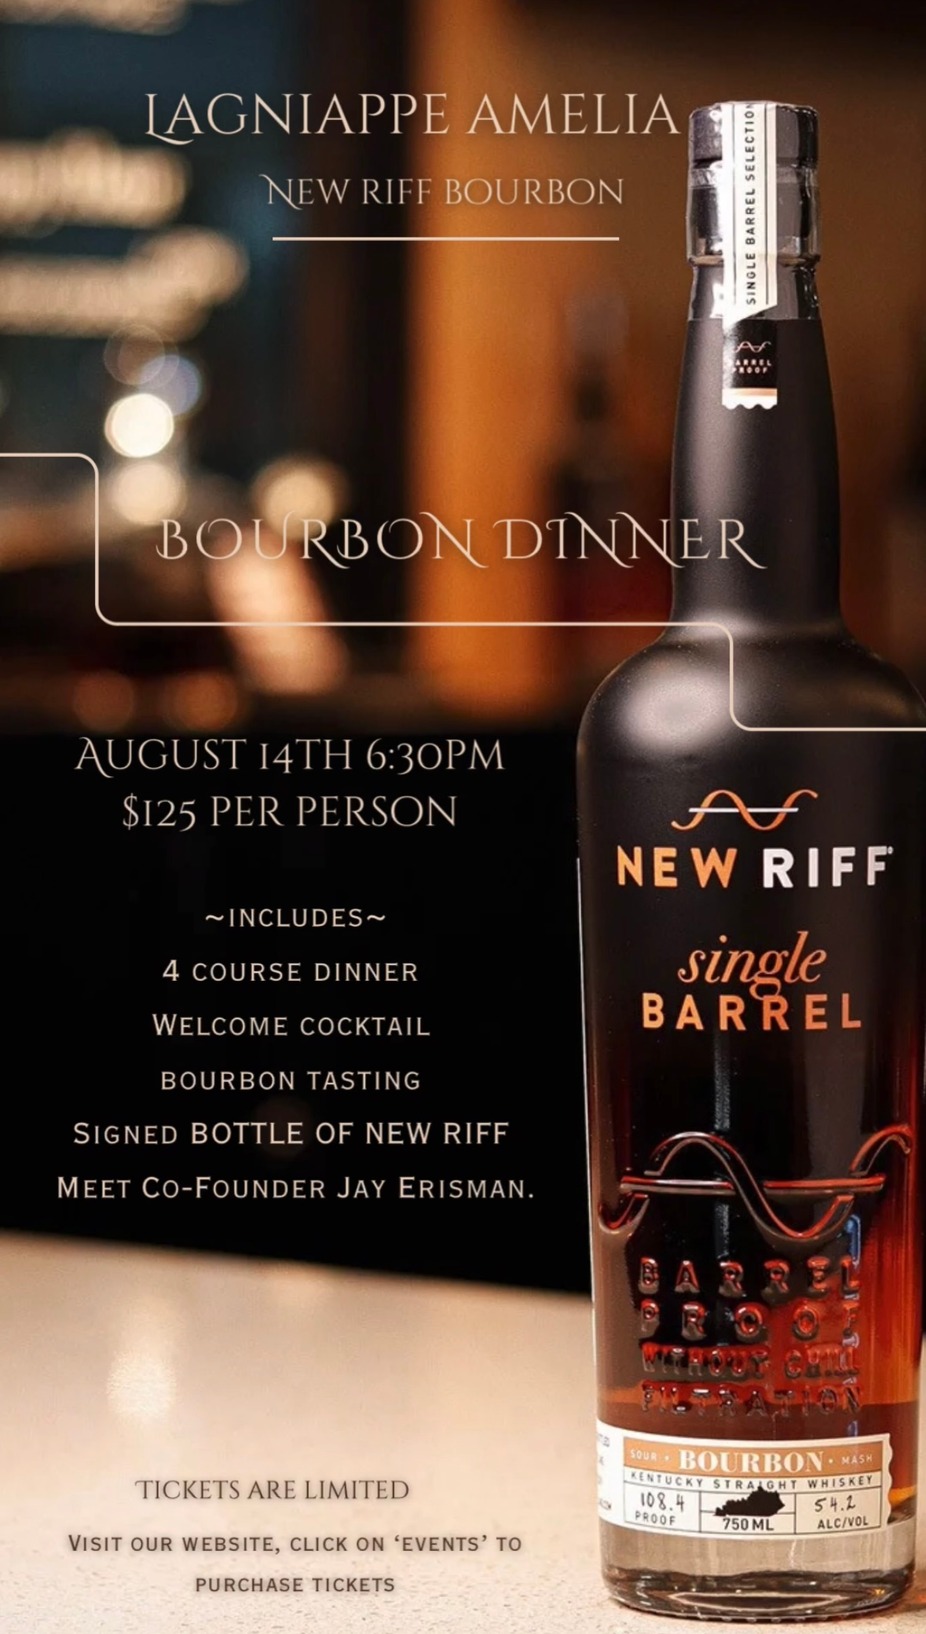 New Riff Bourbon Dinner event photo